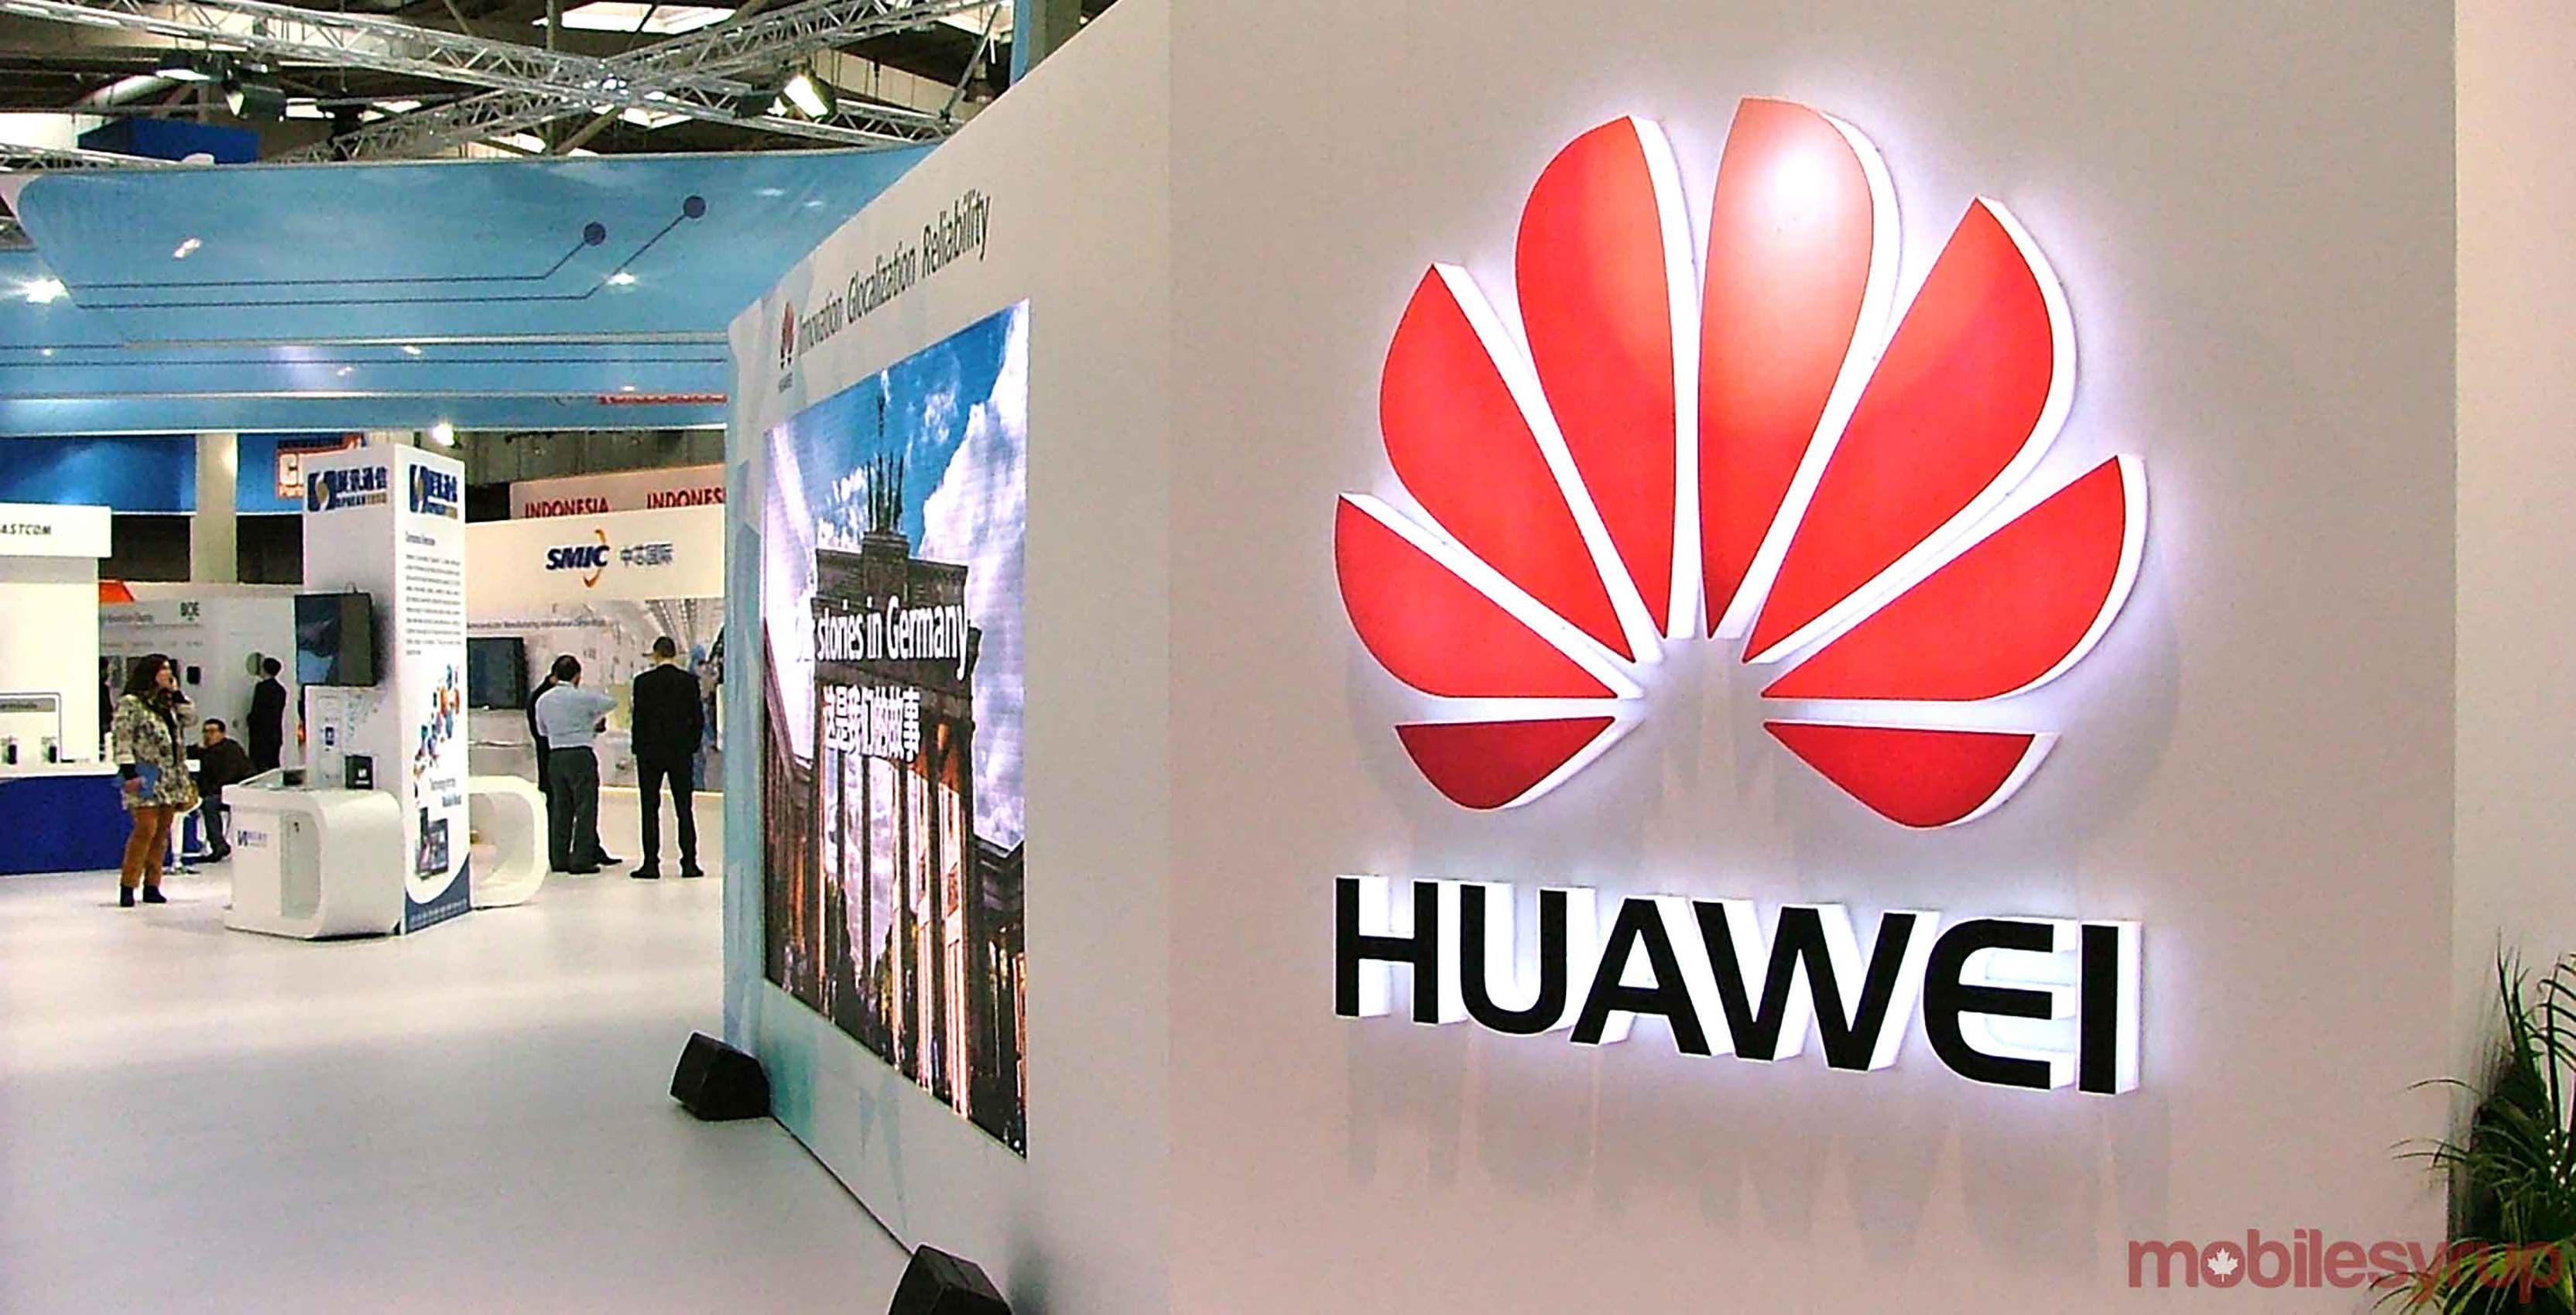 Huawei logo on wall